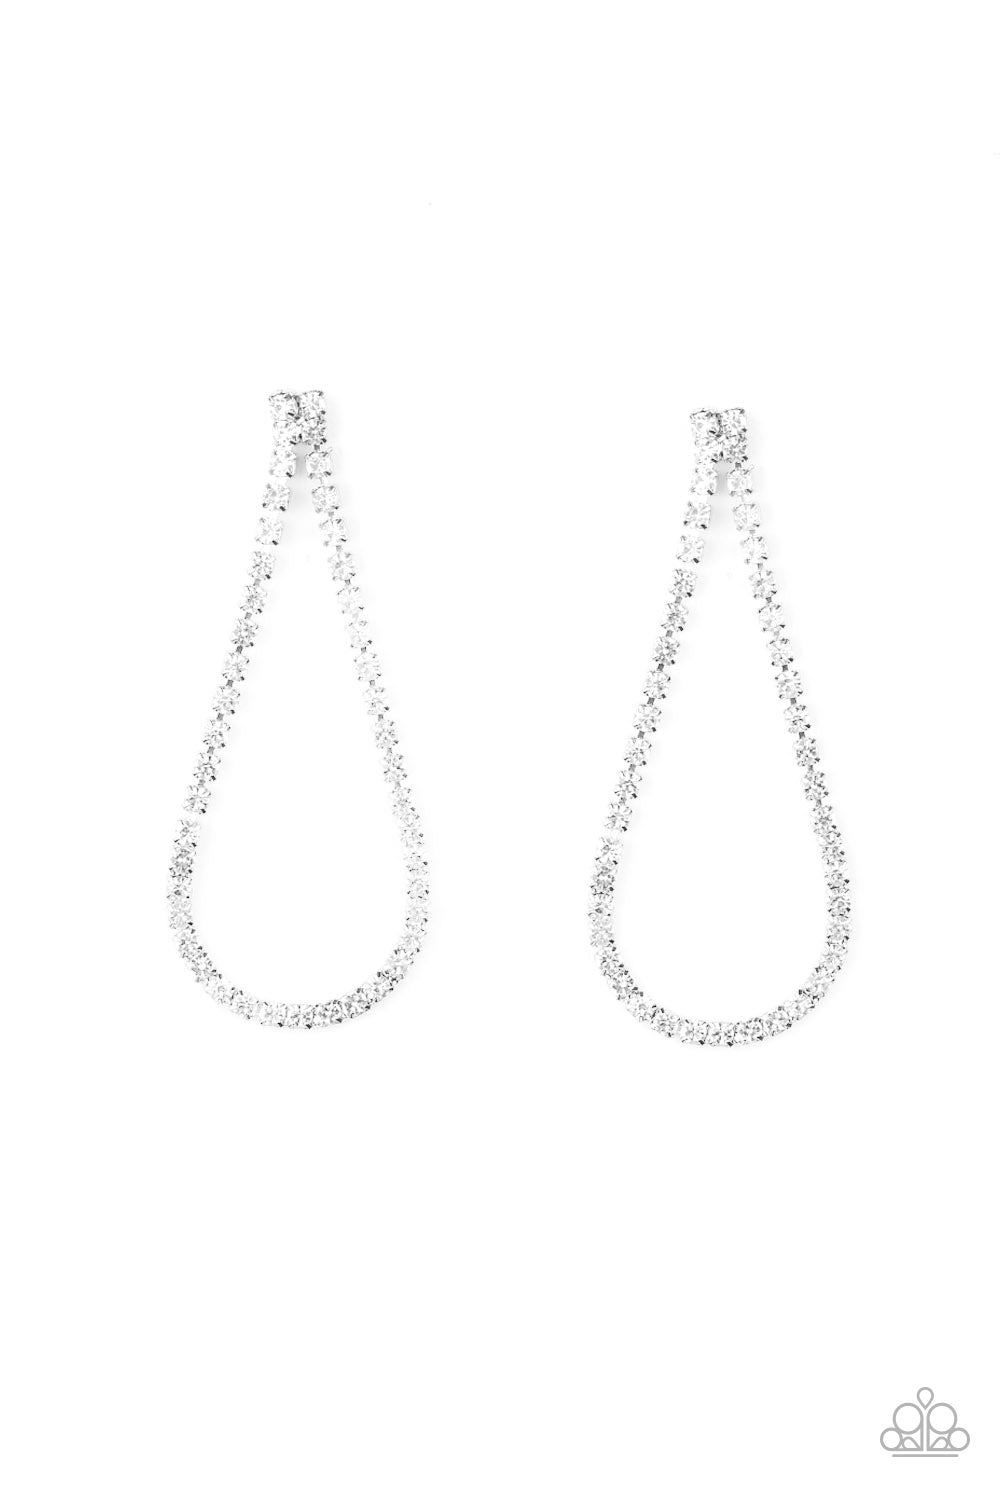 Diamond Drops - Paparazzi - White Rhinestone Loop Teardrop Post Earrings